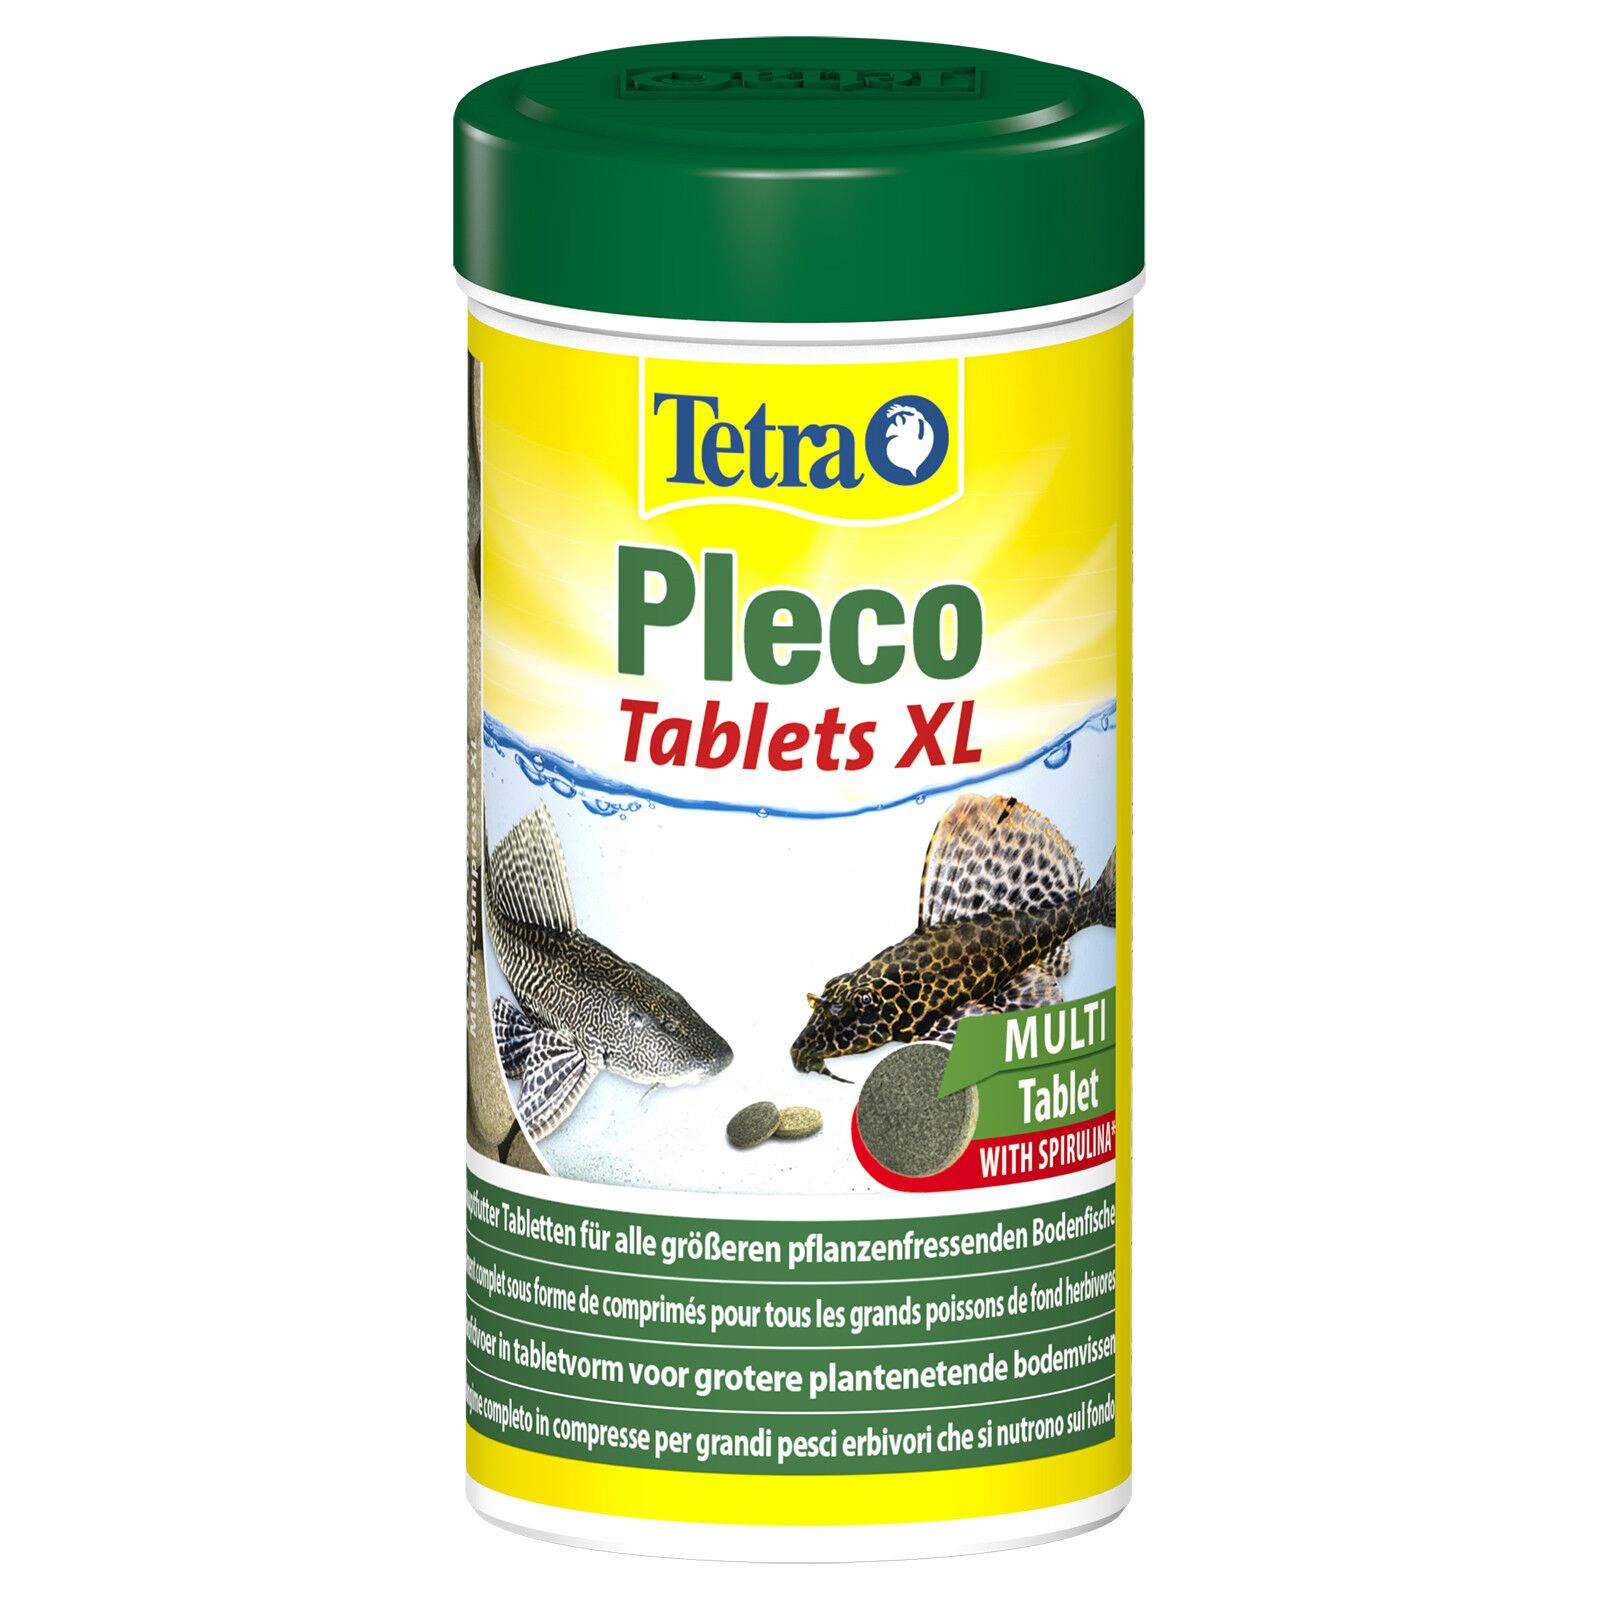 Tetra - Pleco Tablets XL - 133 pcs